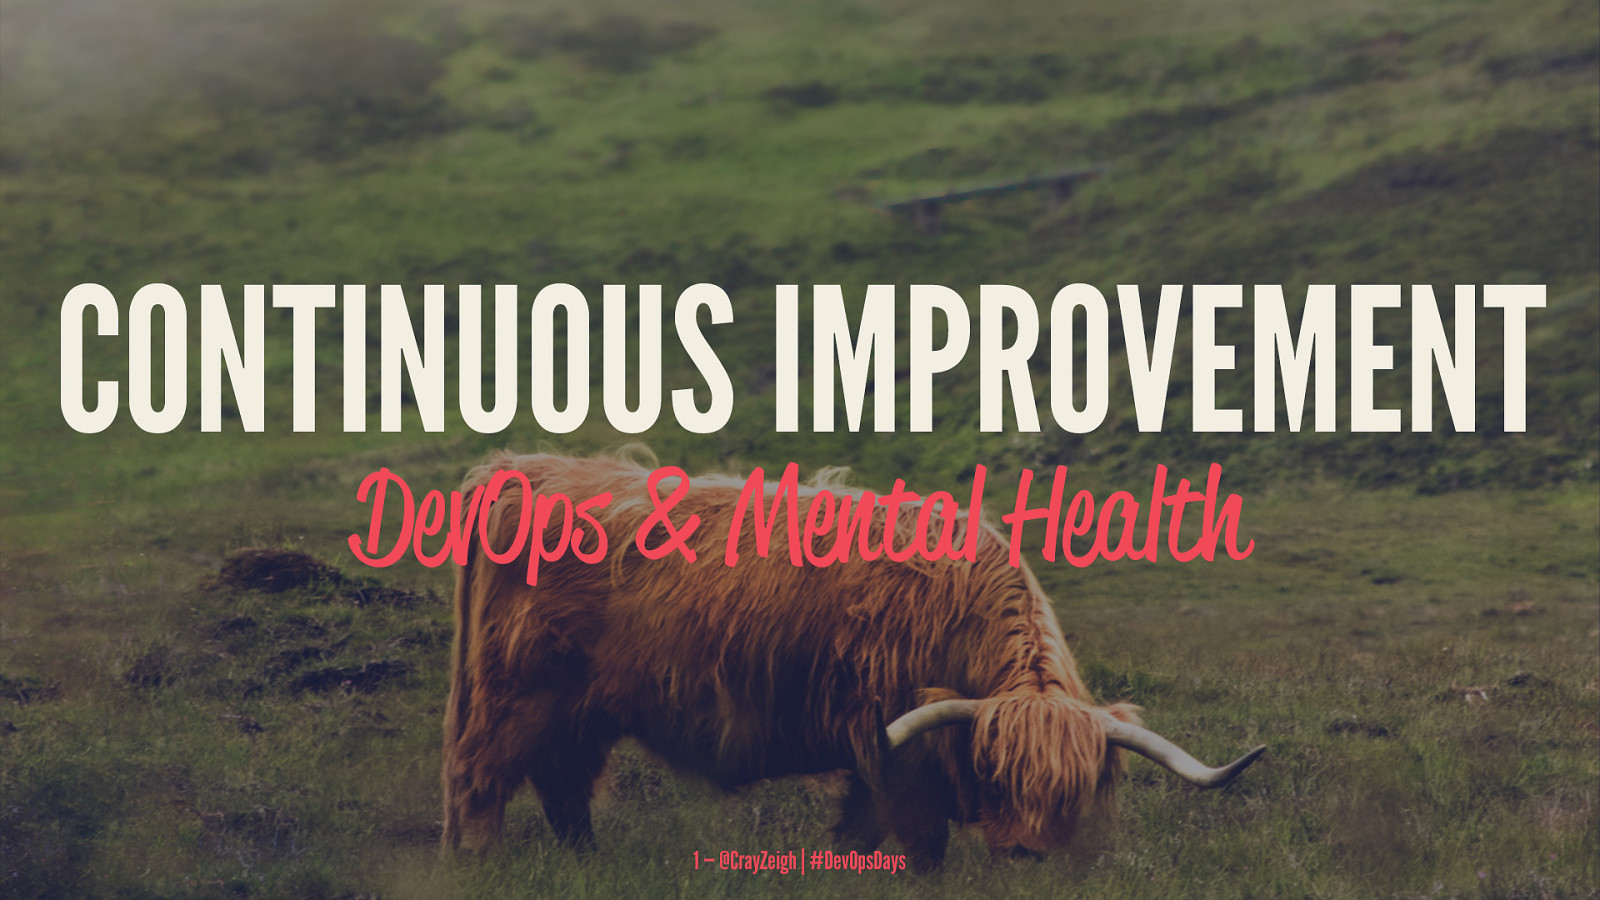 Continuous Improvement: DevOps and Mental Illness